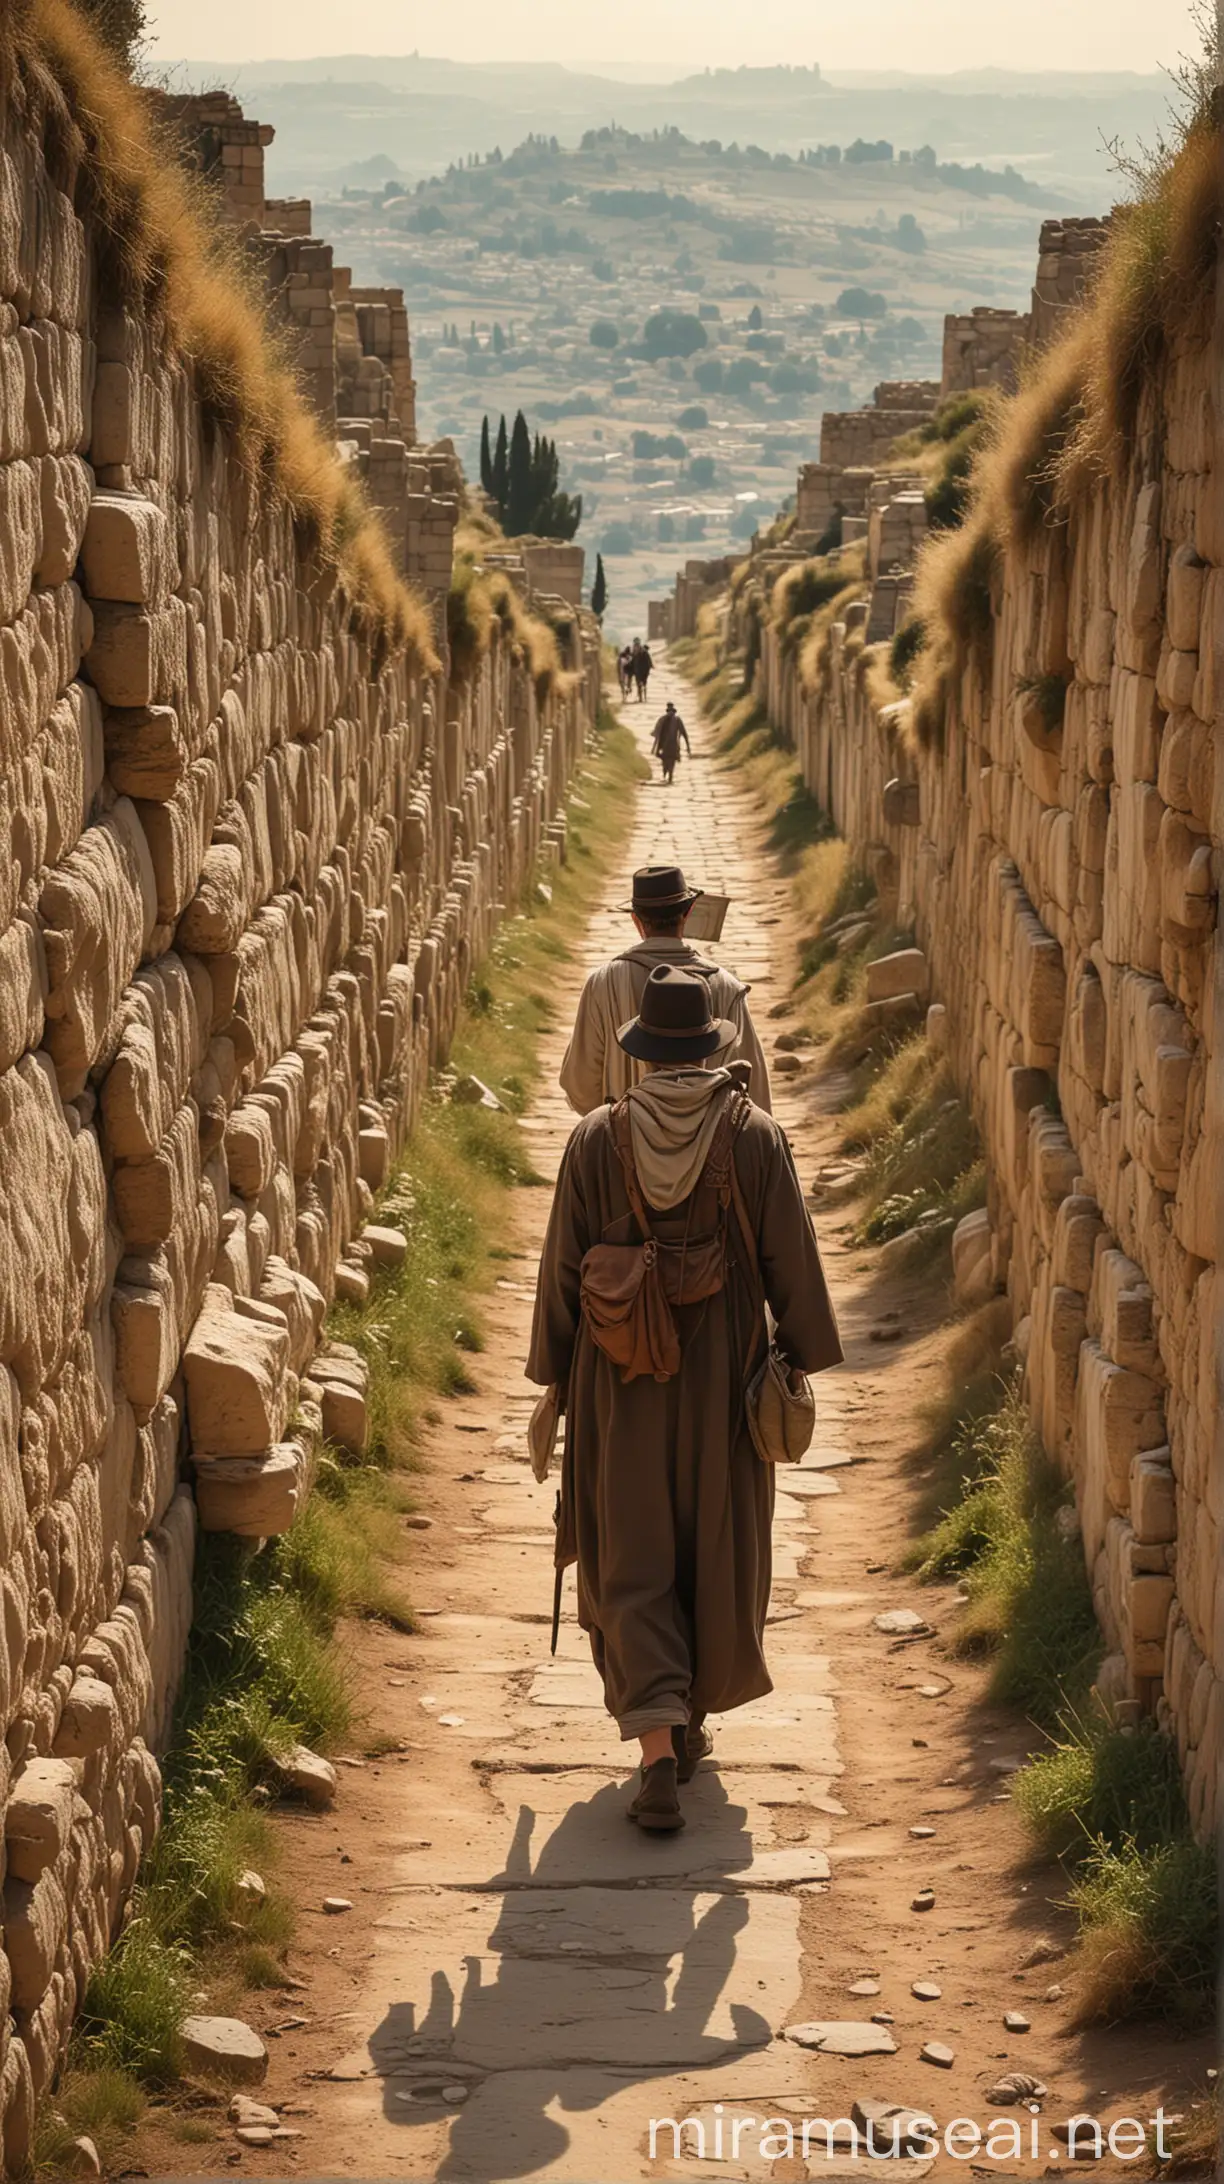 Jewish Travelers Walking on Narrow Ancient Road